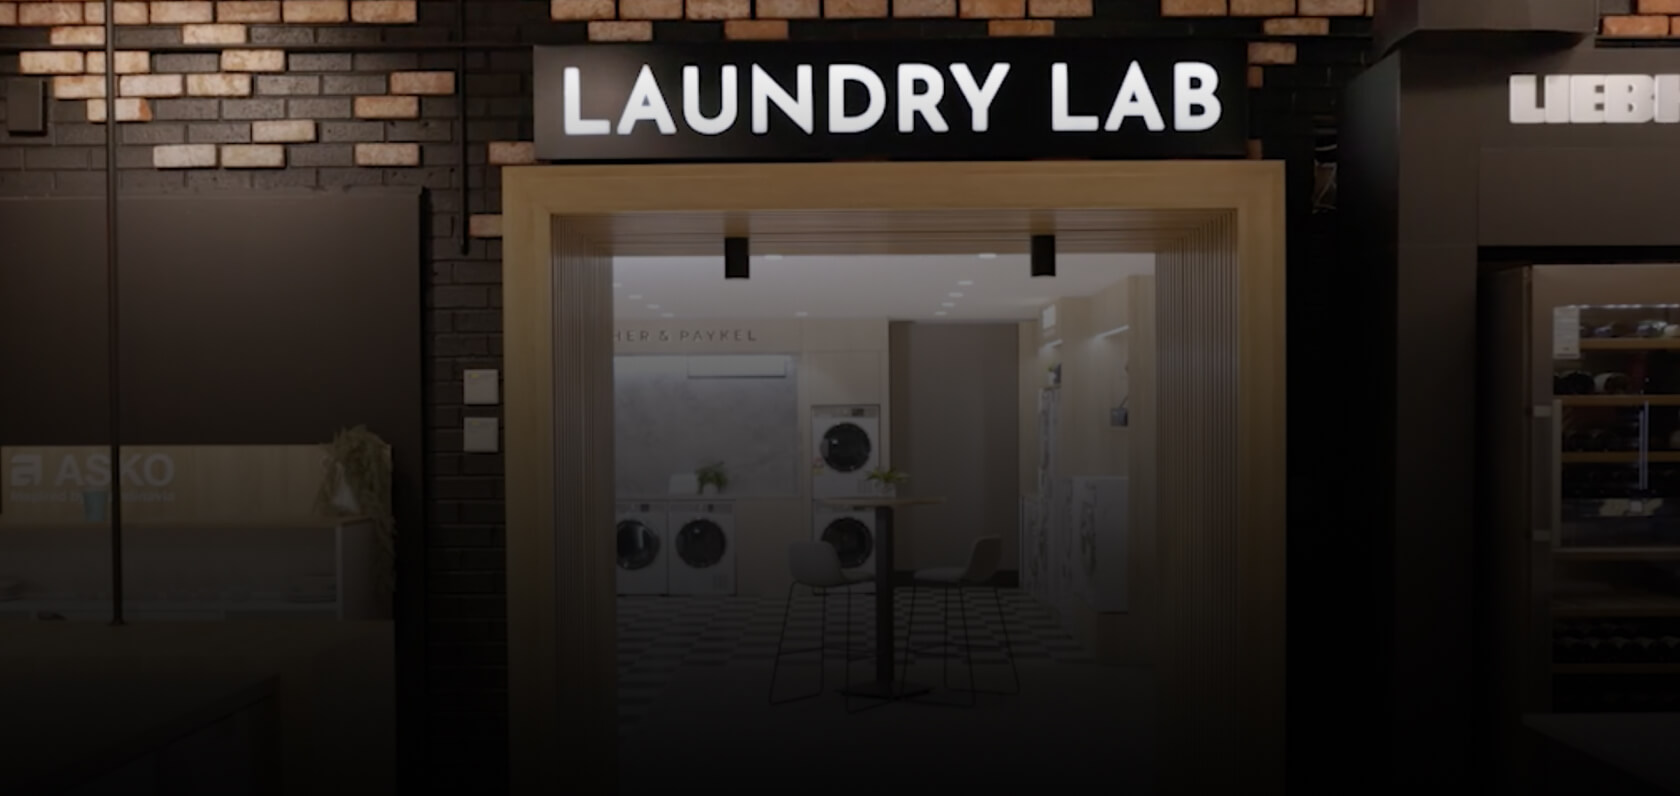 Hart & Co.'s Laundry Lab